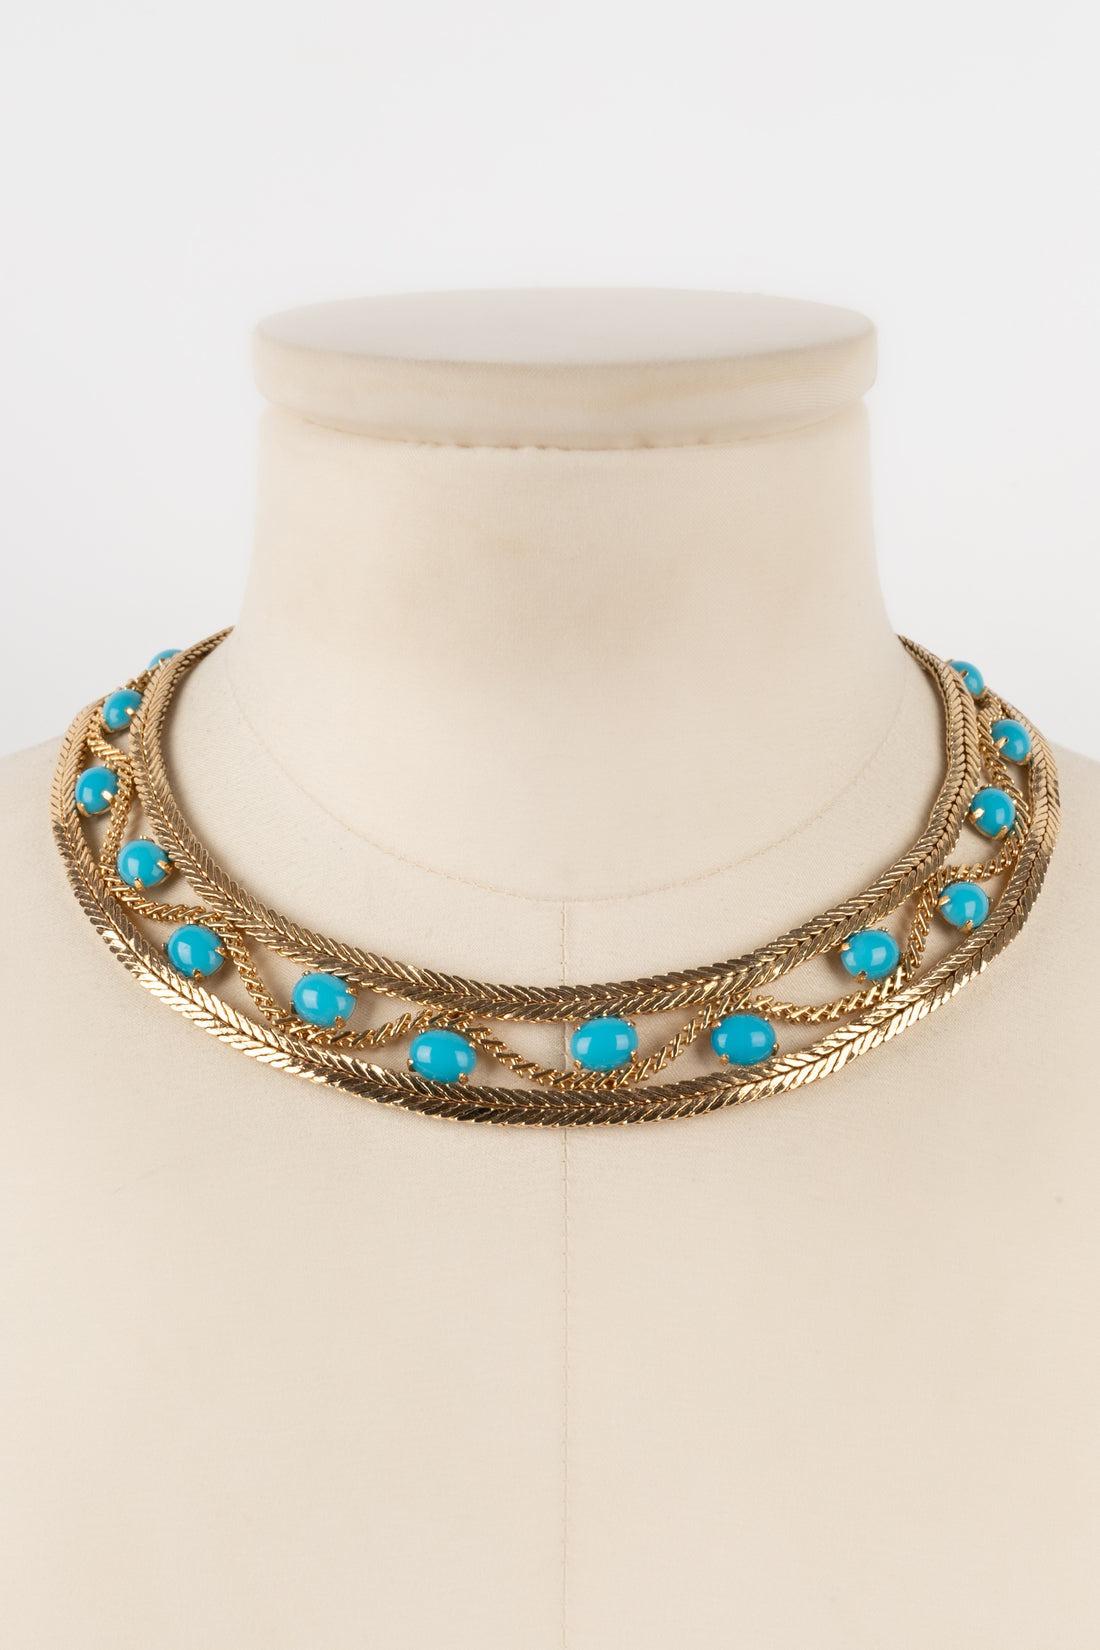 Women's Christian Dior Golden Metal Short Necklace, 1965 For Sale